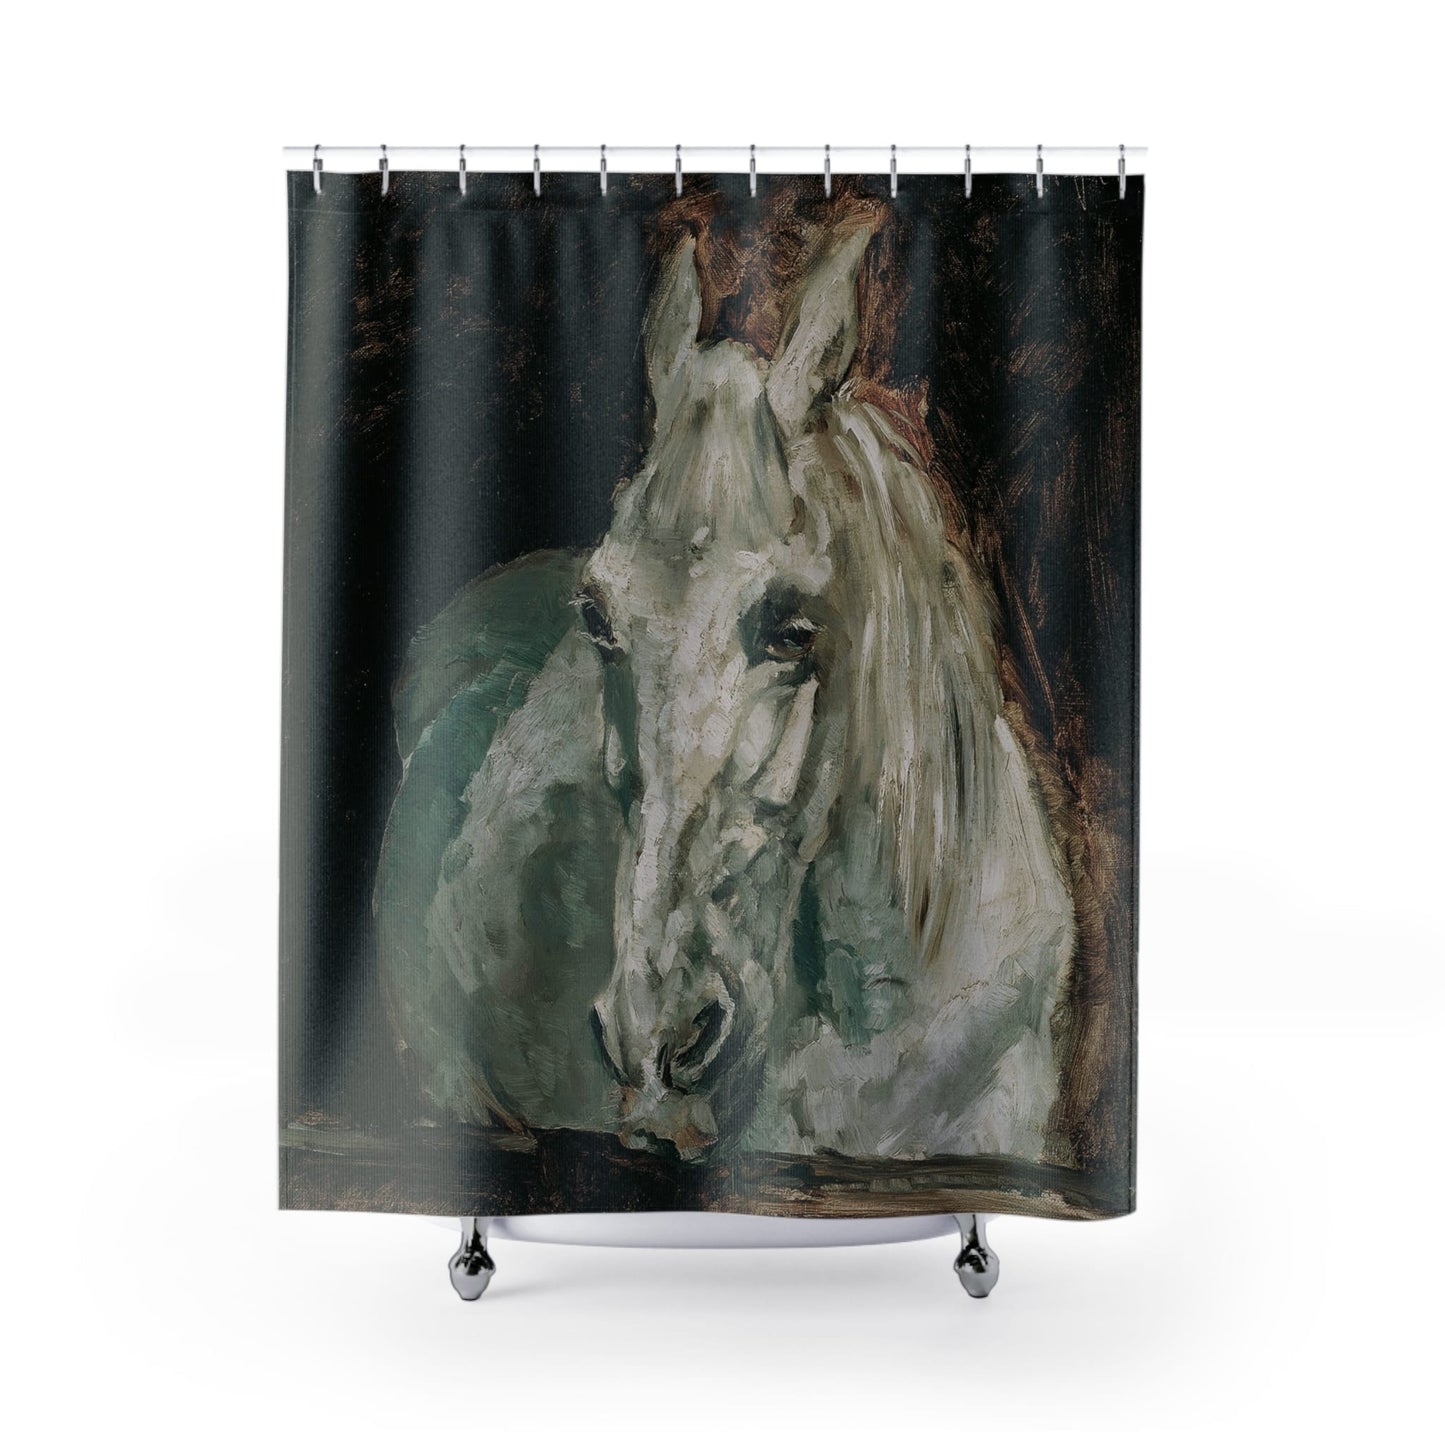 Abstract Wild Animal Shower Curtain, Animal Shower Curtains, Horse in a Stable Shower Curtain